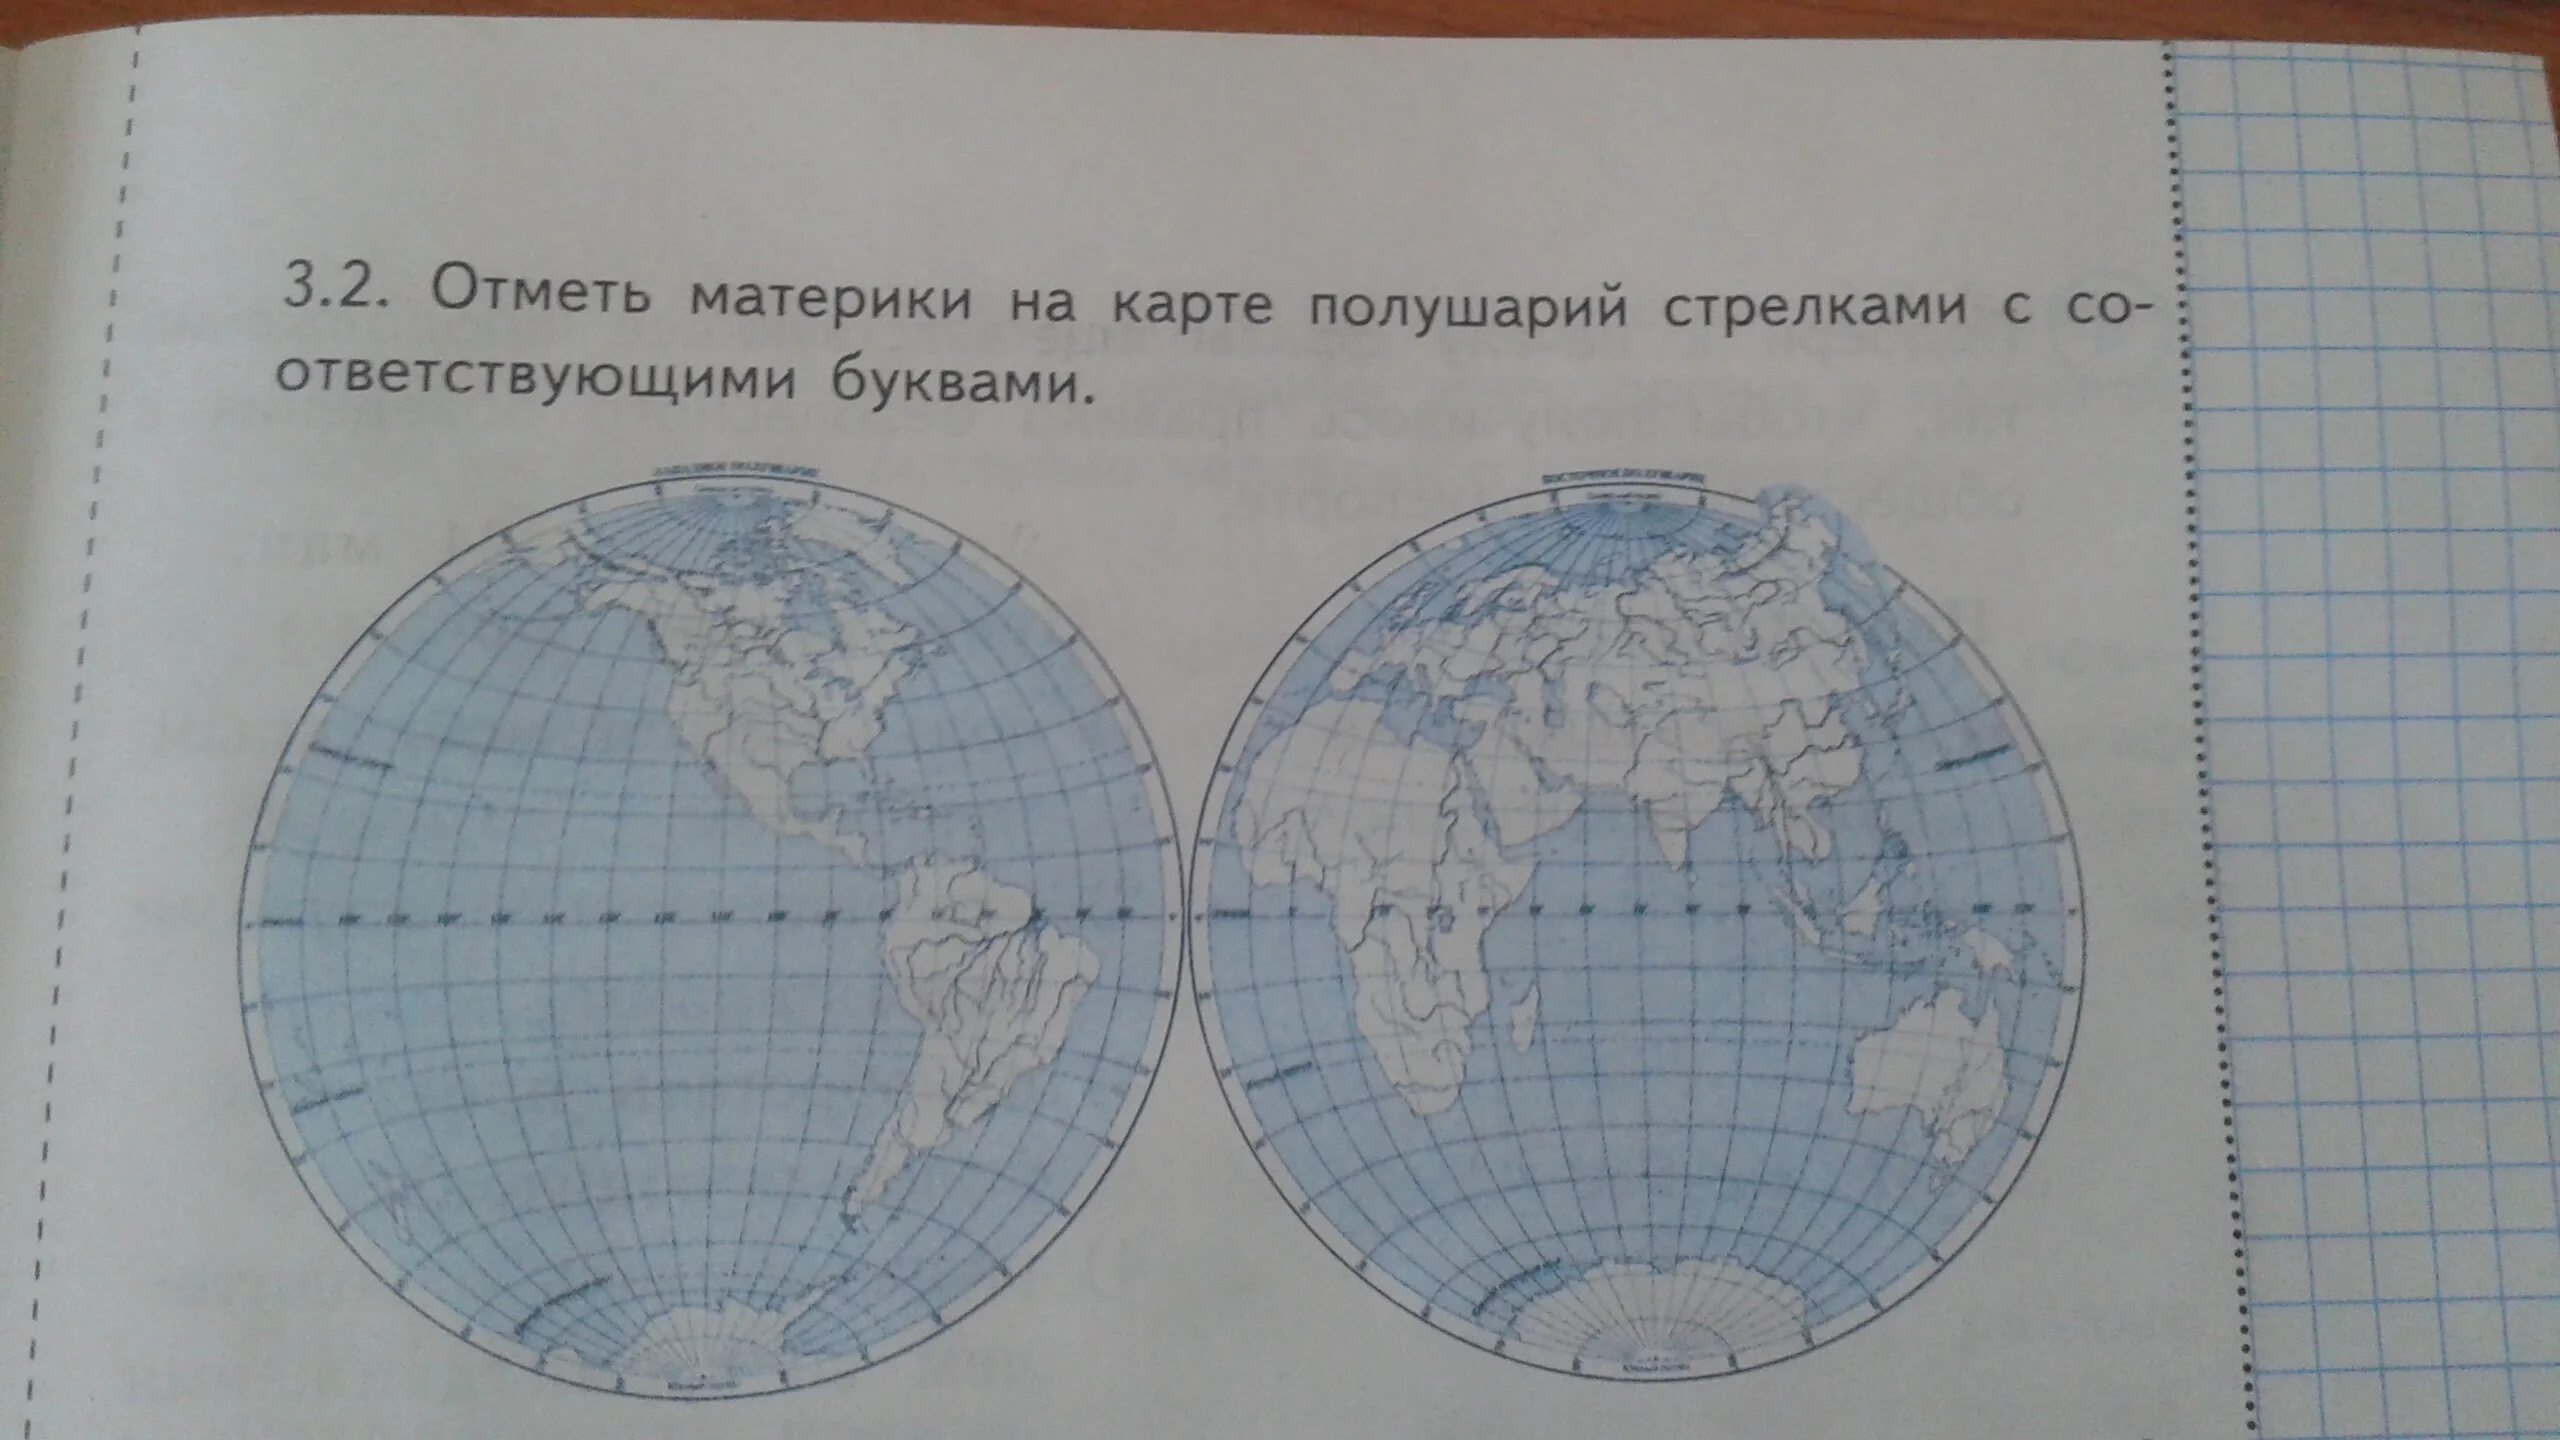 Карта полушарий с материками и Океанами. Карта полушарий материков. Физическая карта полушарий. Карты полушарий земли с названиями материков и океанов.